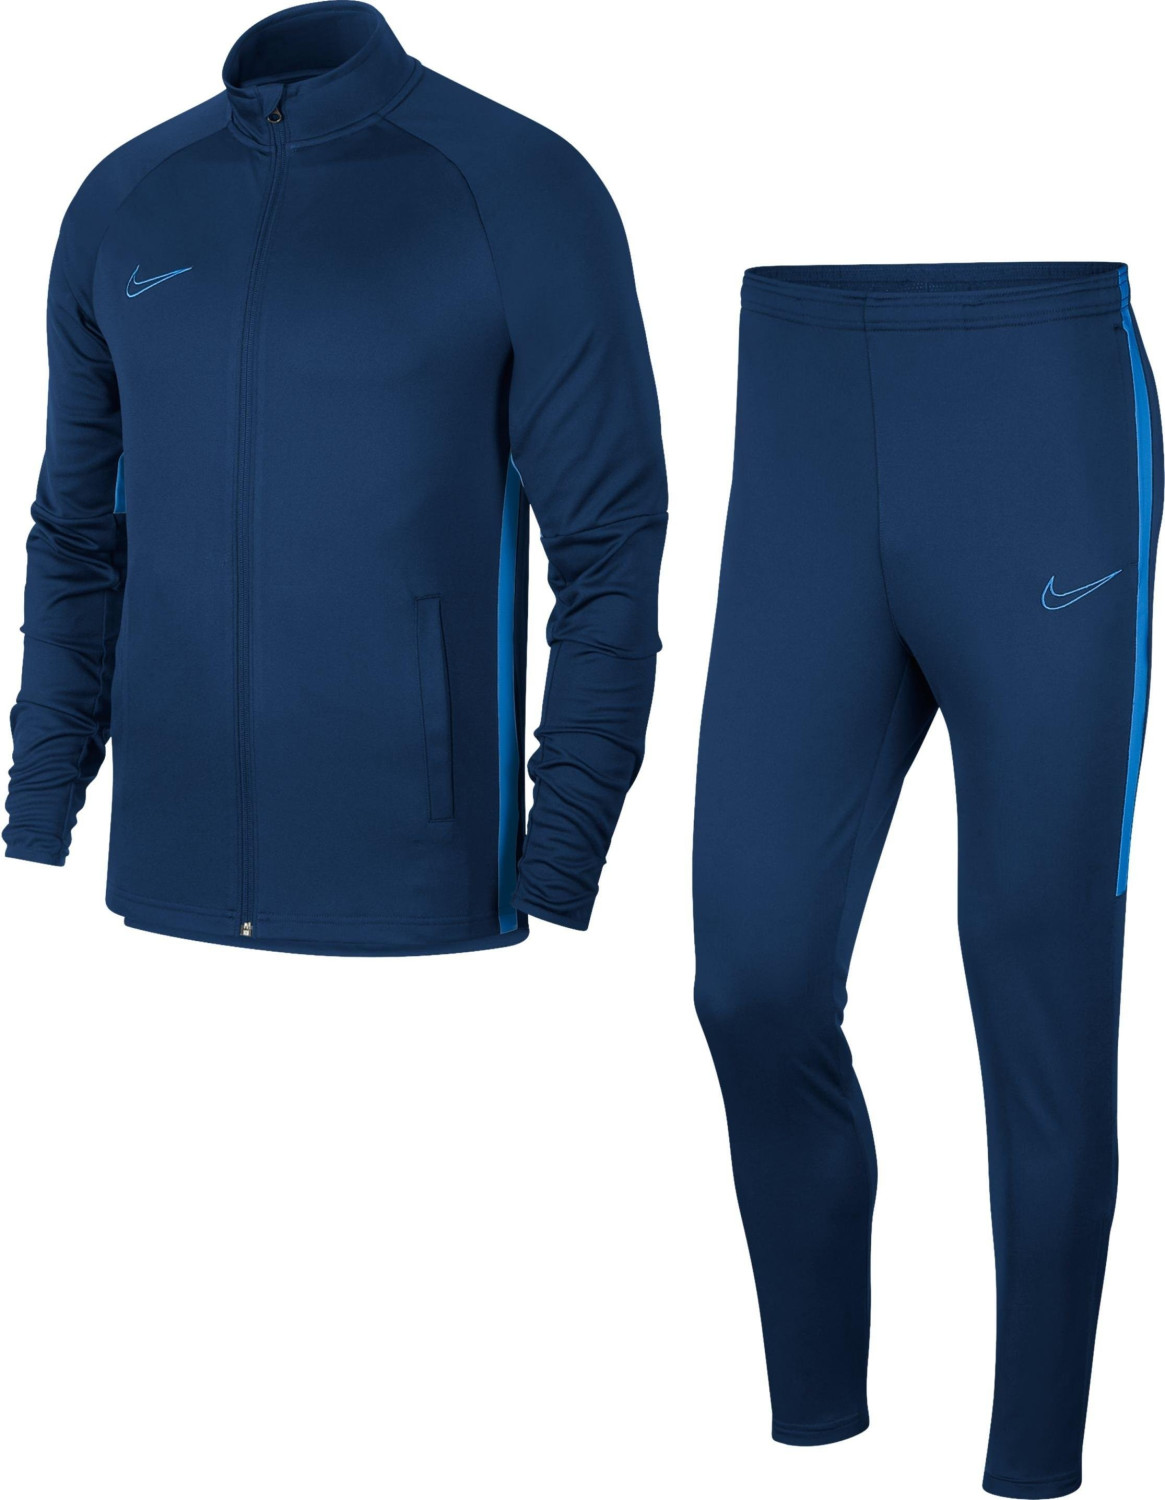 Nike Dri-Fit Academy Tracksuit coastal blue/light photo blue/light photo blue (AO0053)